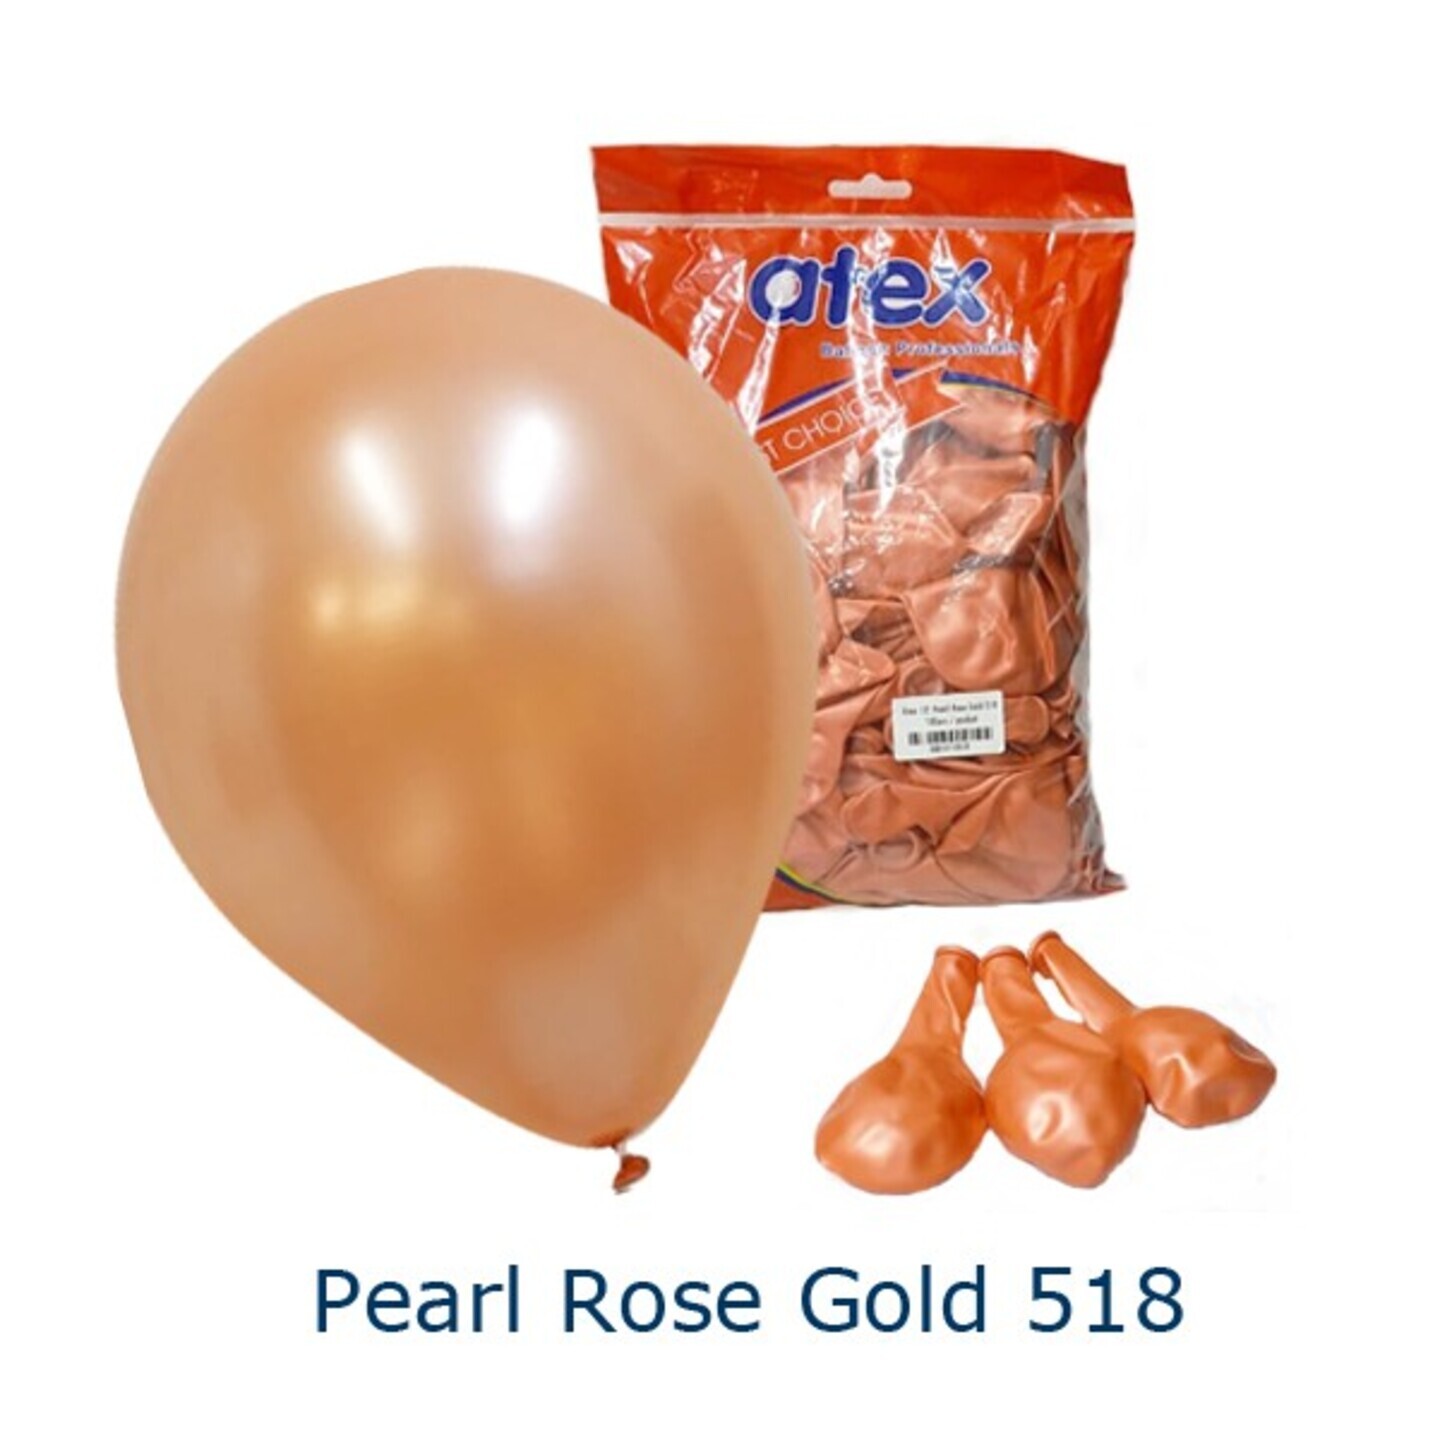 Pearl Rose Gold 518